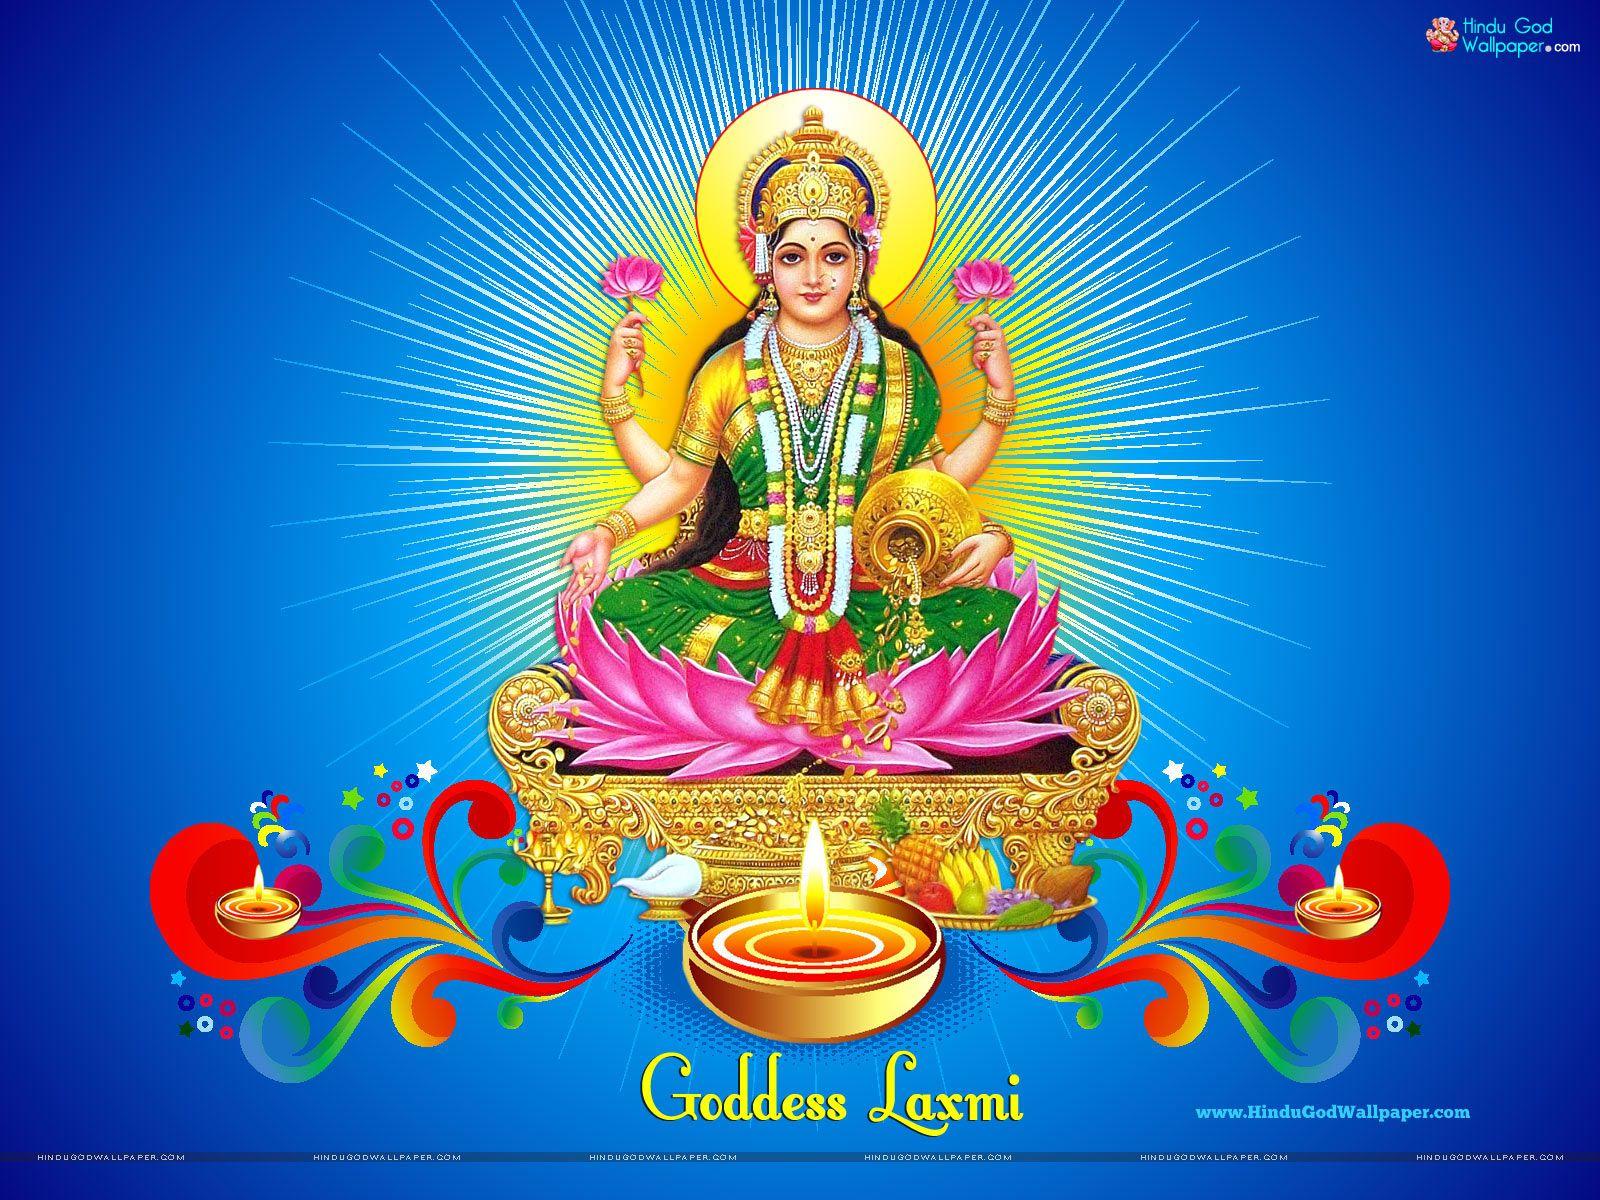 Goddess Laxmi HD Wallpaper Full Size High Resolution Download. Epic